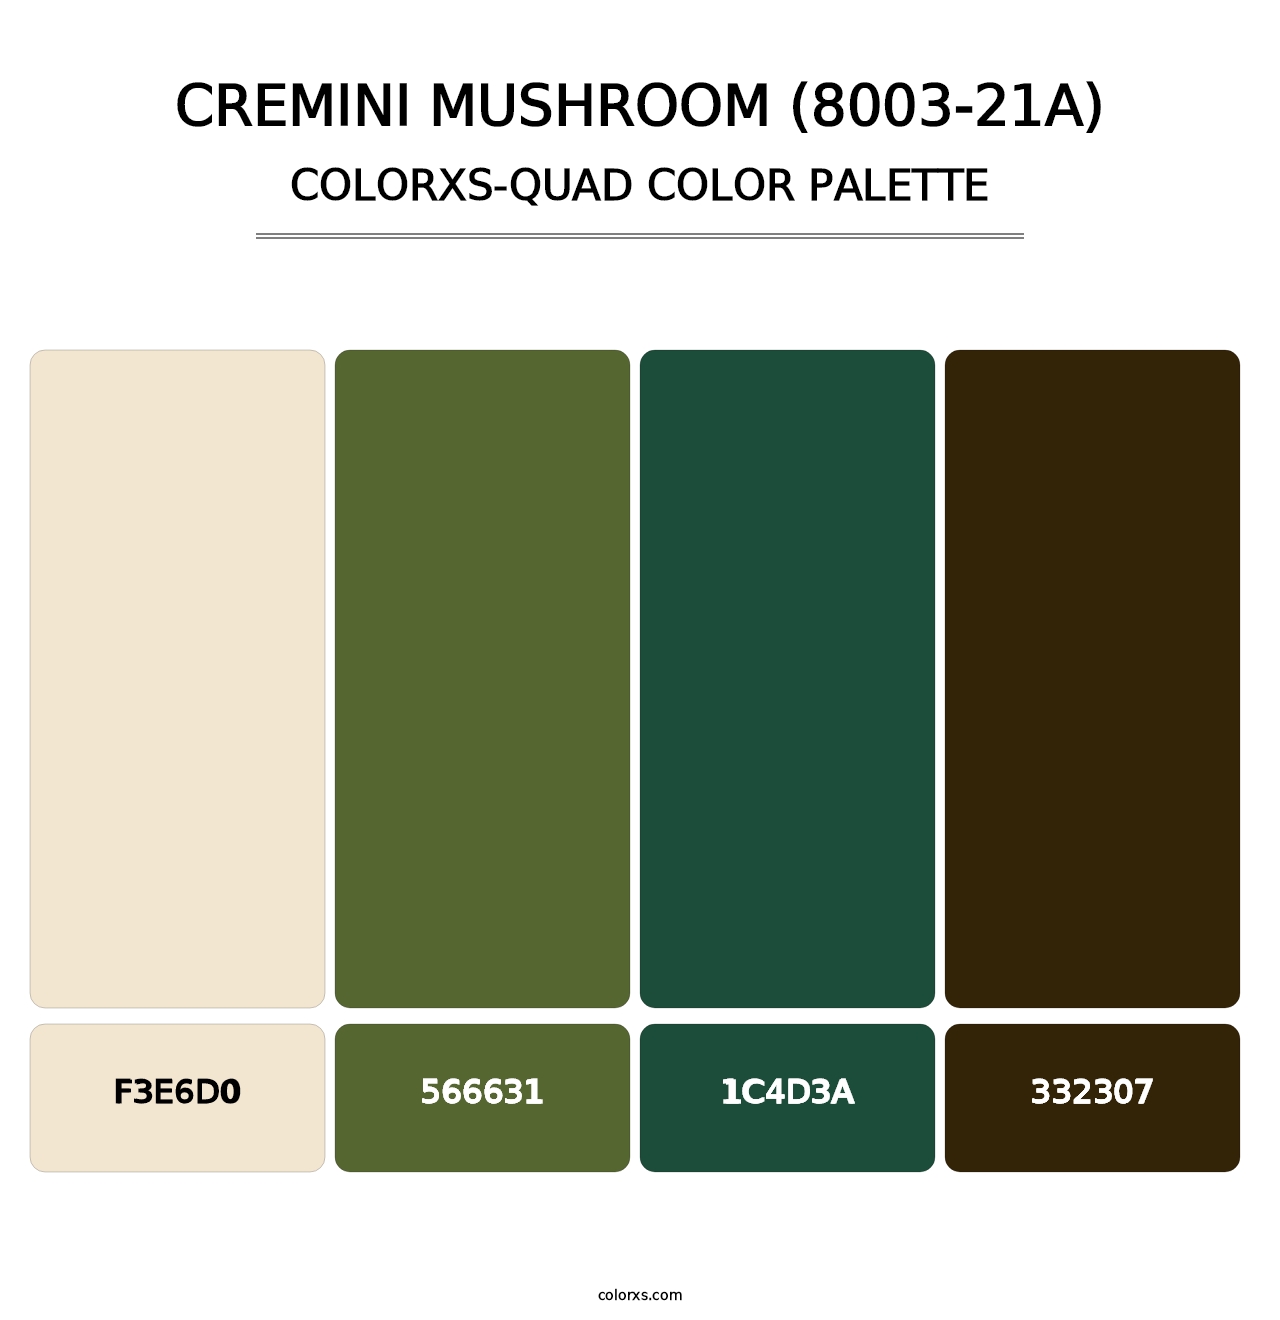 Cremini Mushroom (8003-21A) - Colorxs Quad Palette